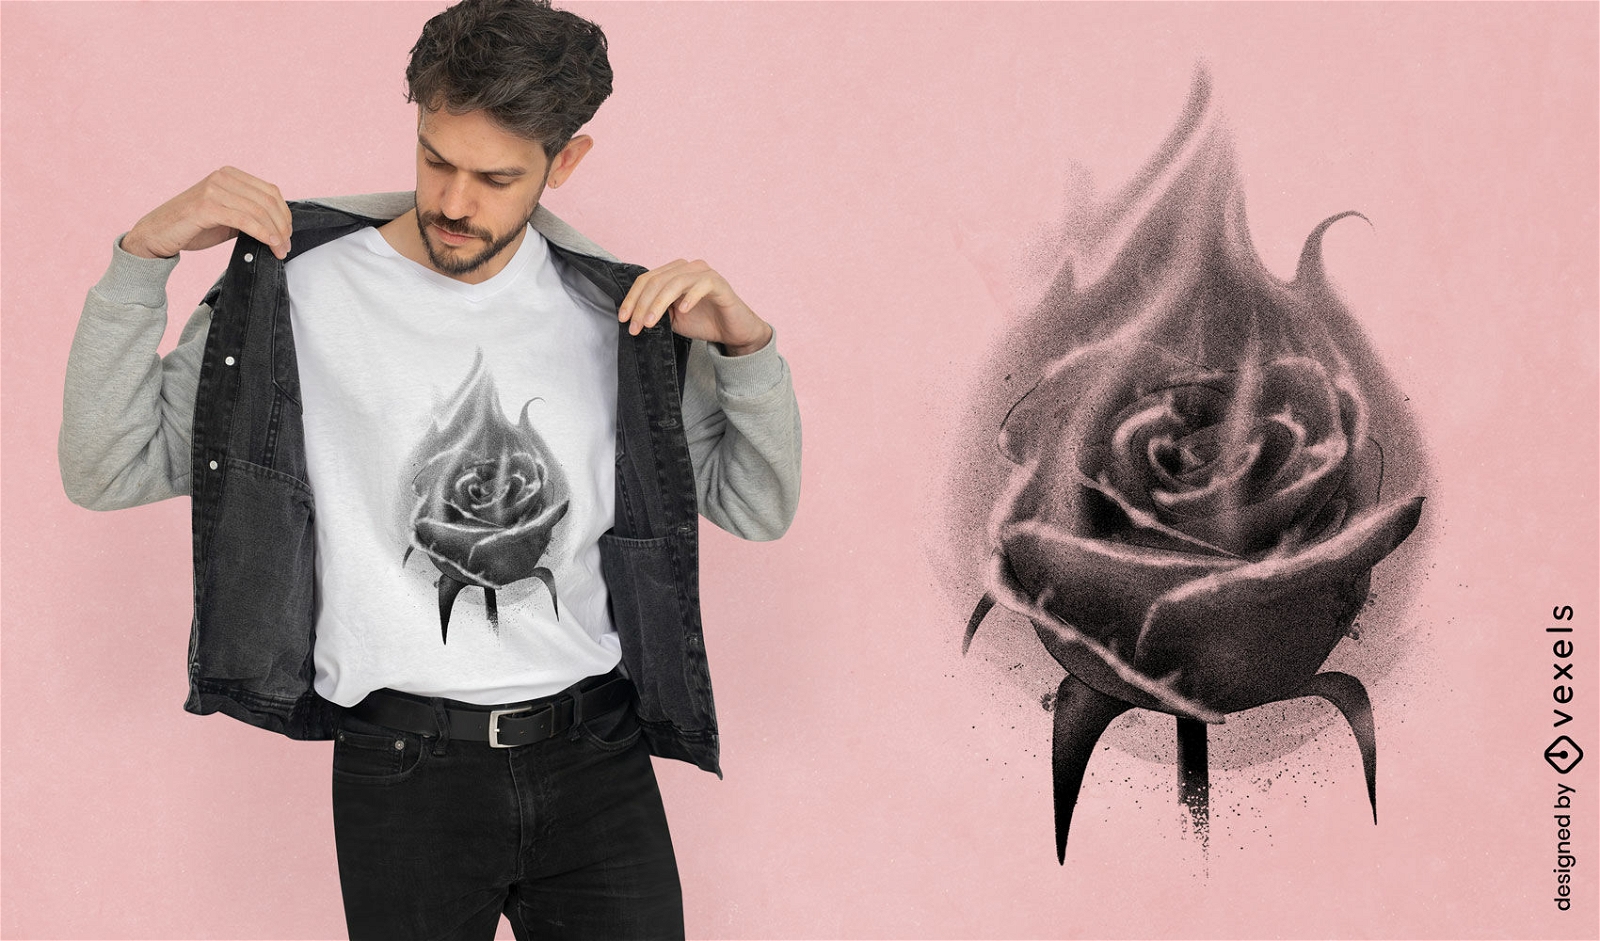 Burning rose t-shirt design